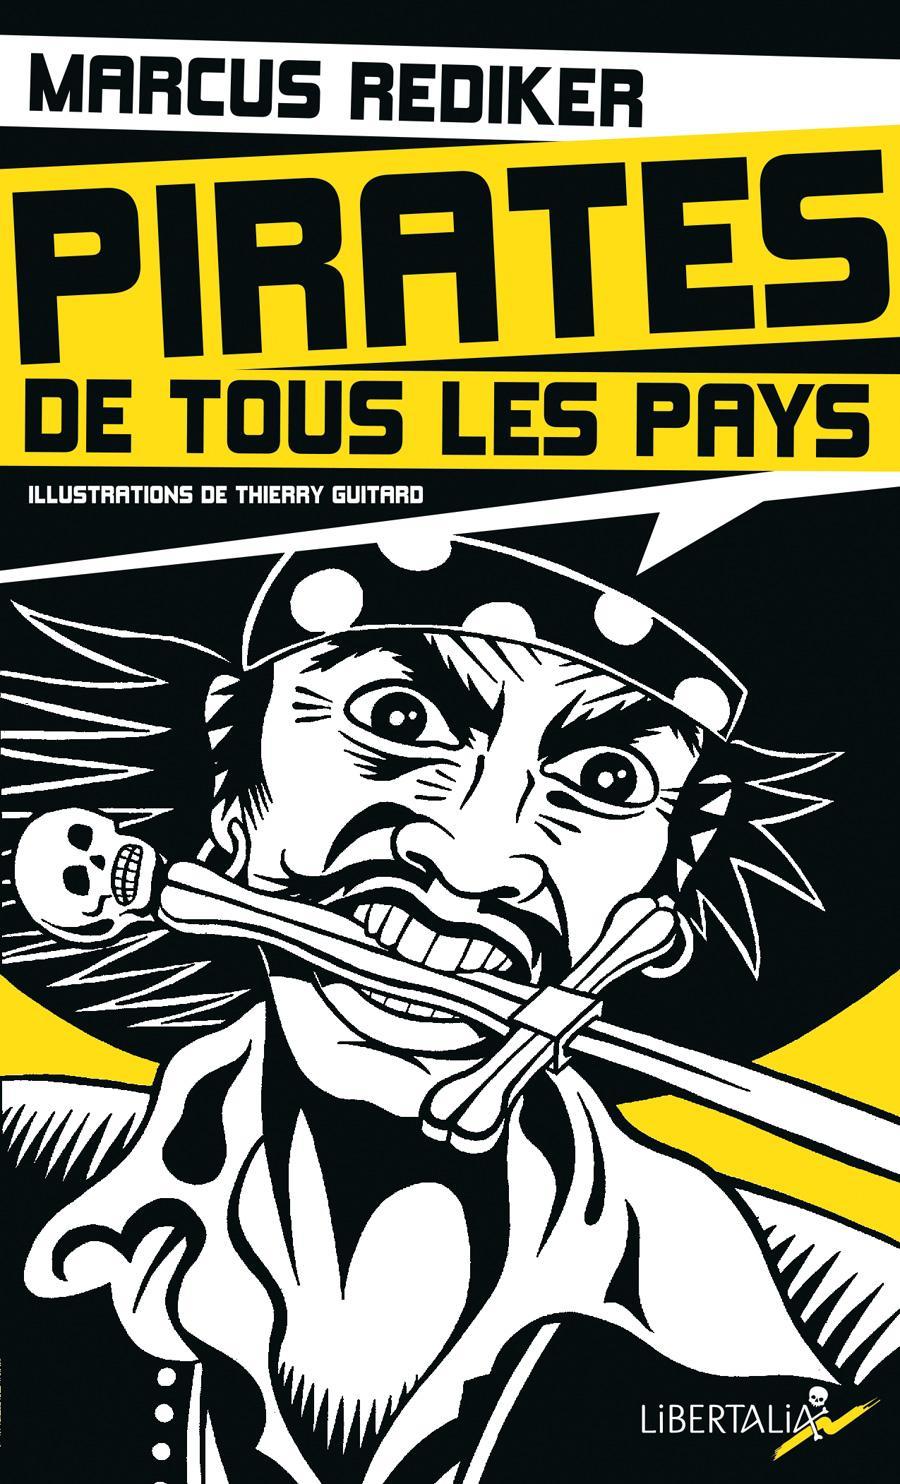 Marcus Rediker: Pirates de tous les pays (French language, 2017, Libertalia)